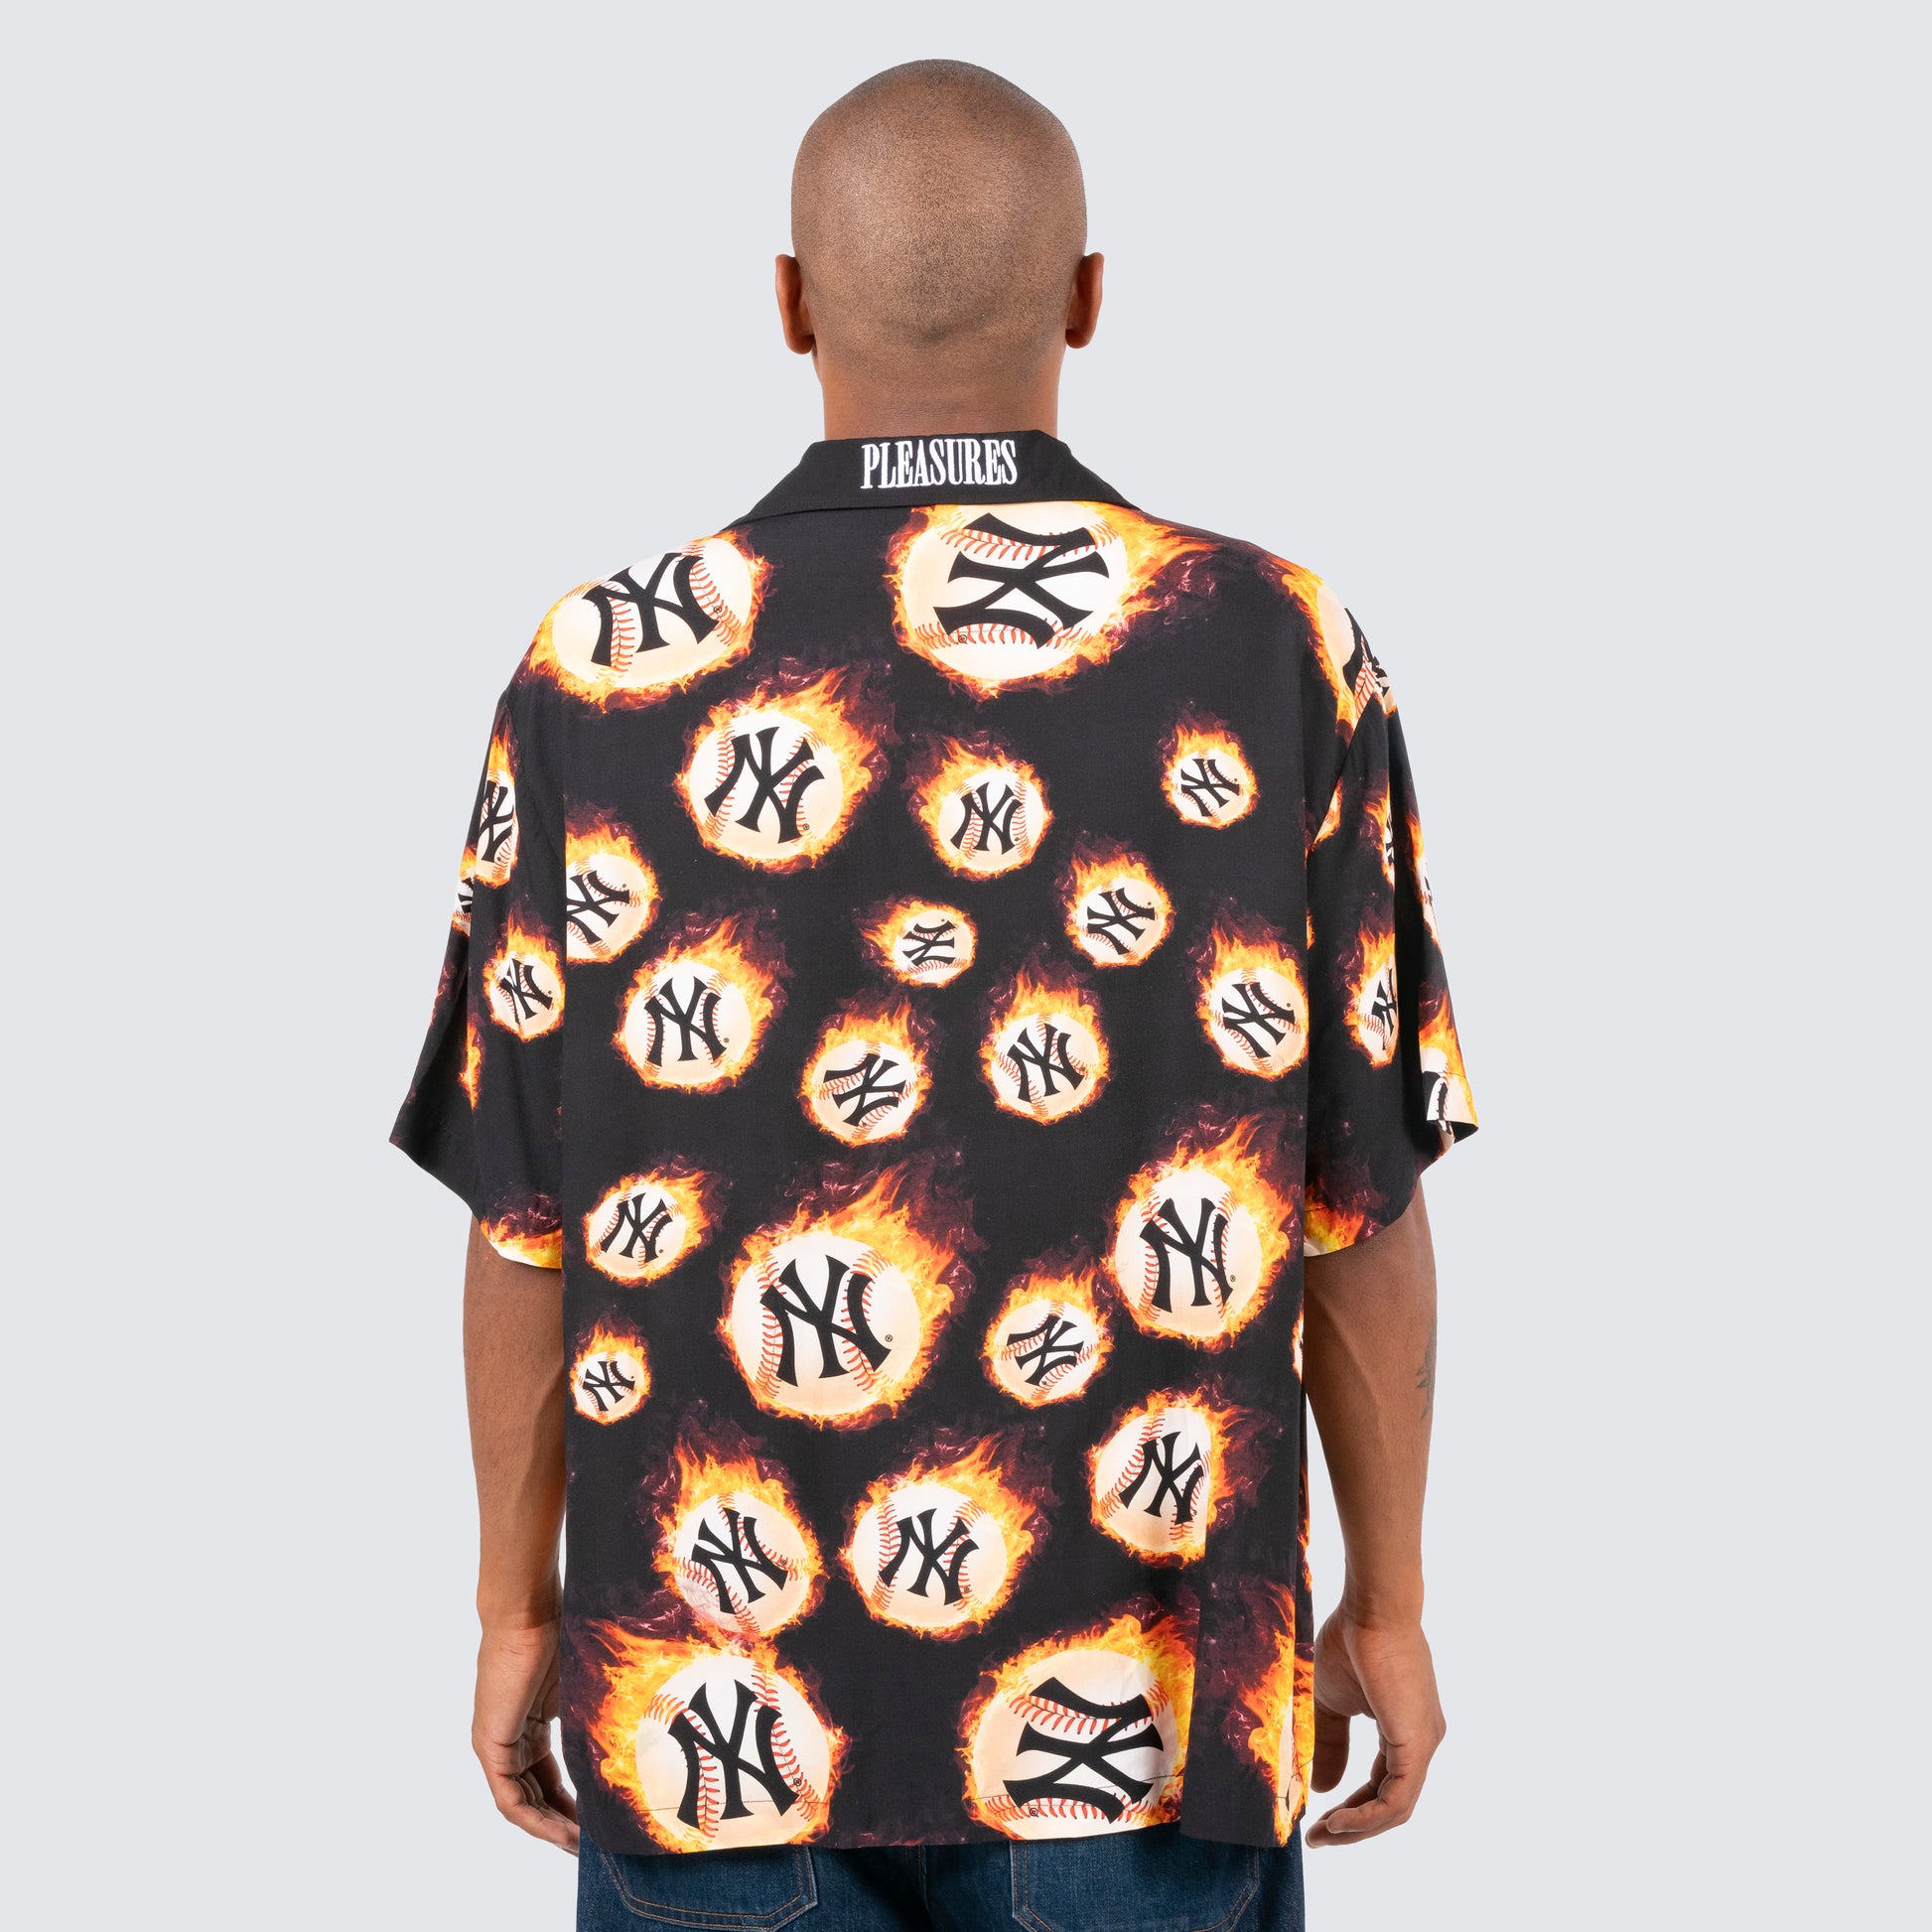 Oakland Athletics PLEASURES Flame Fireball Button-Up Shirt - Black